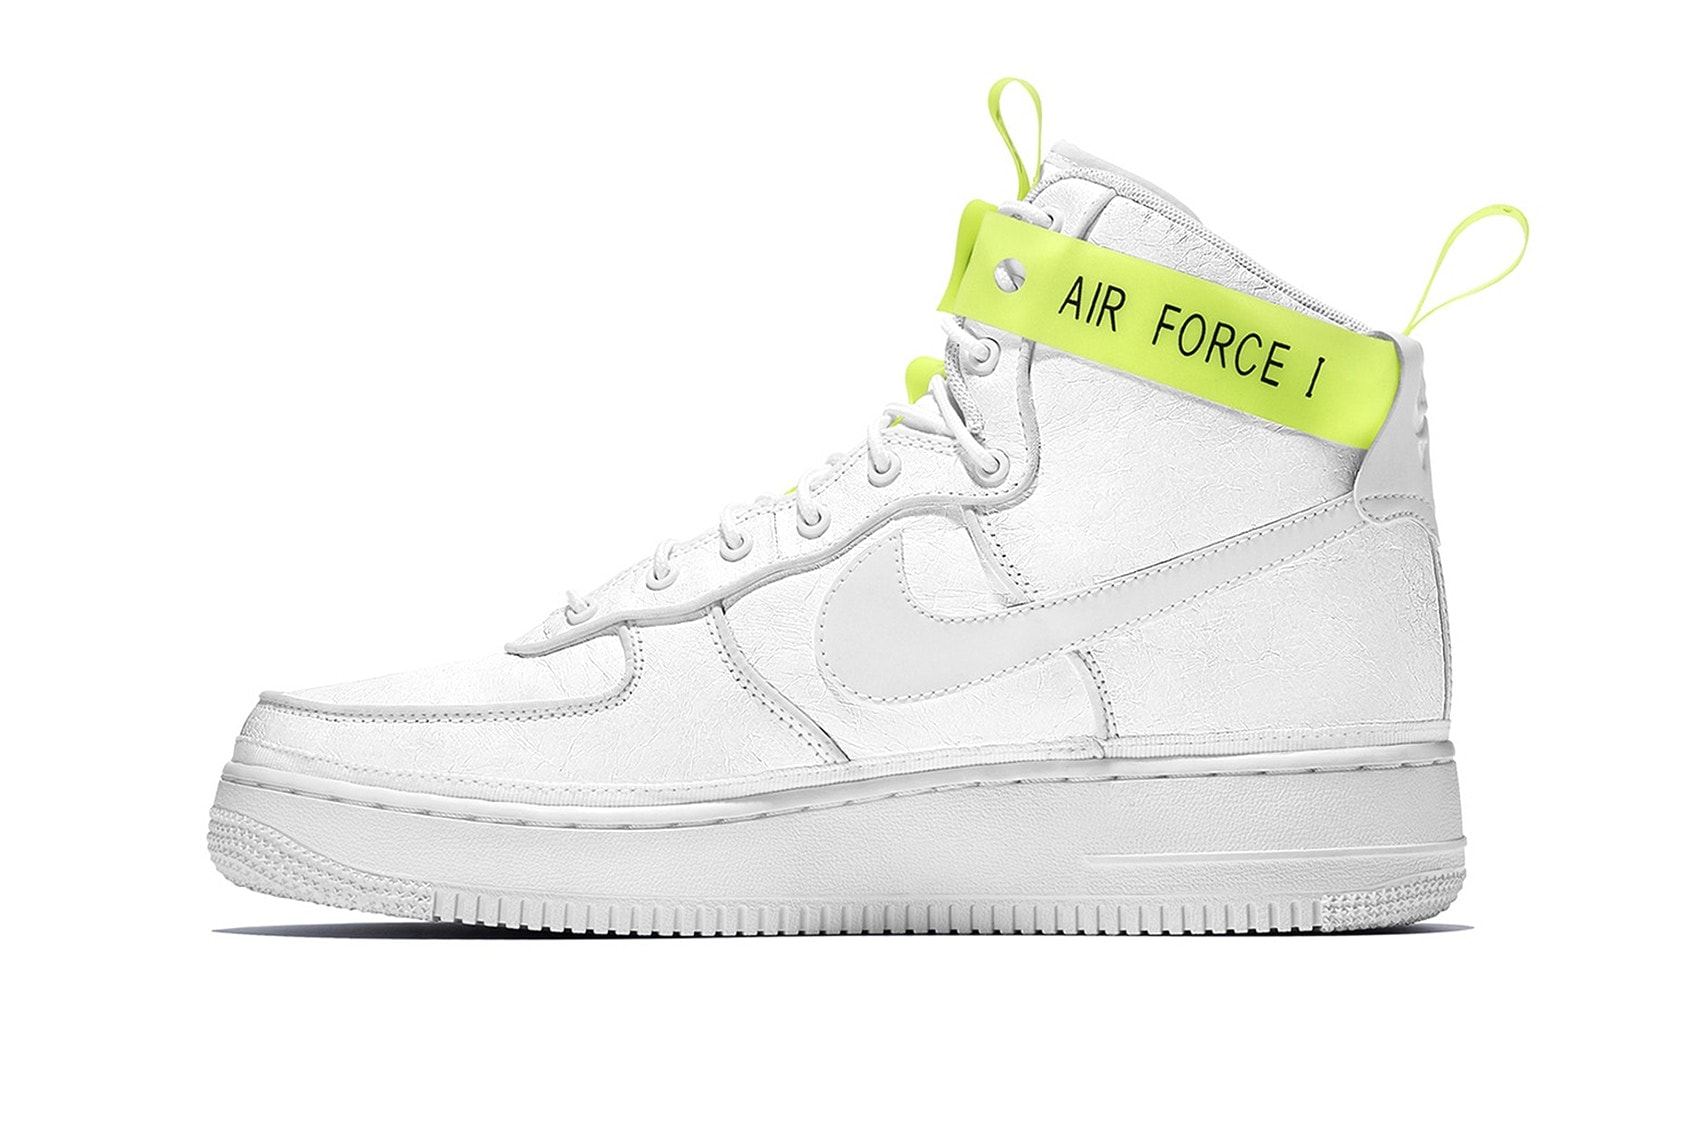 MAGIC STICK x Nike 聯乘 Air Force 1「VIP」即將上架